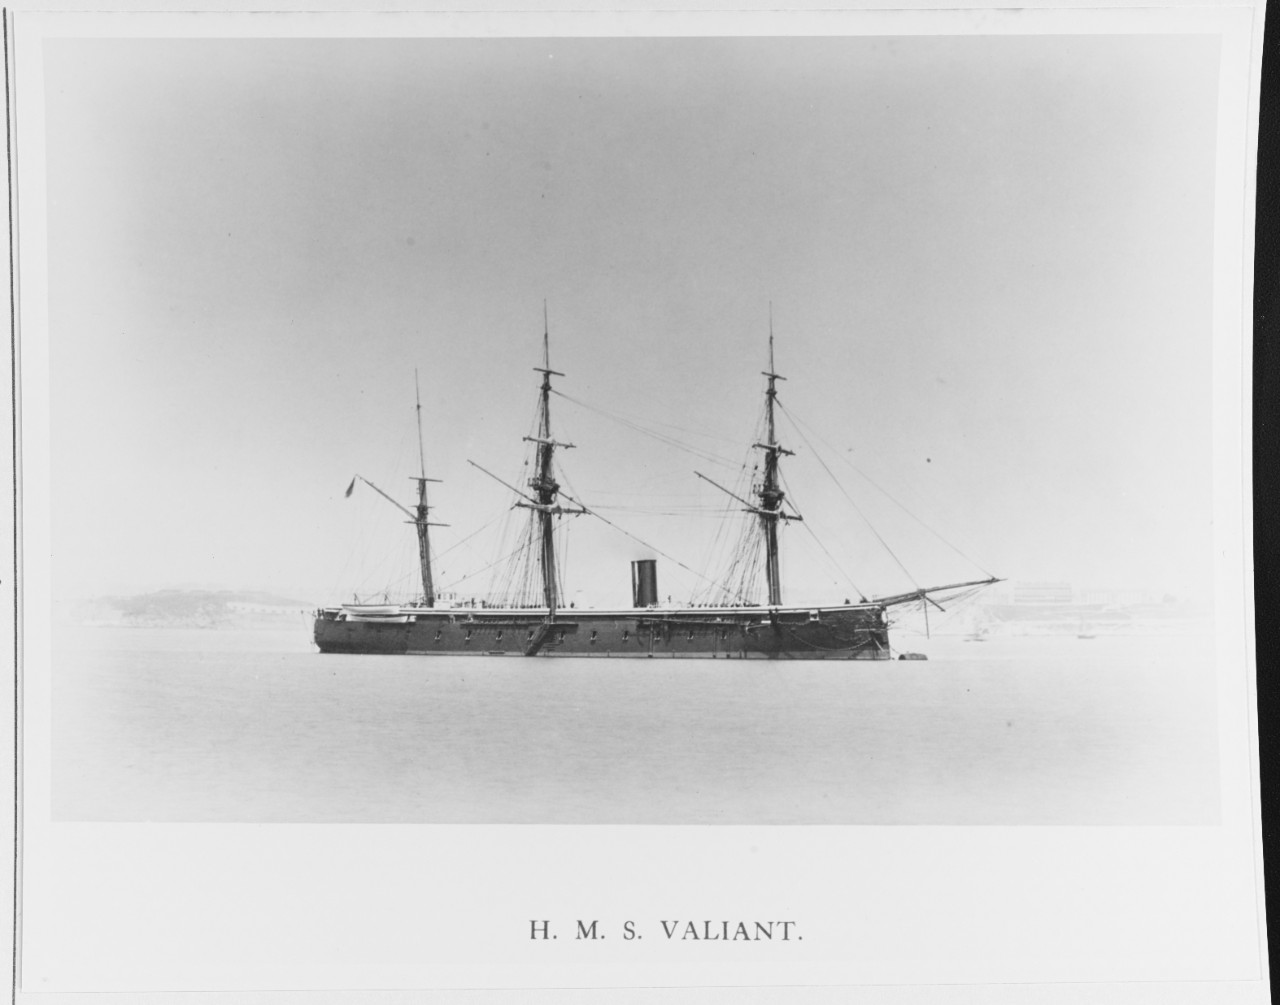 HMS VALIANT (BRITISH BATTLESHIP, 1863)